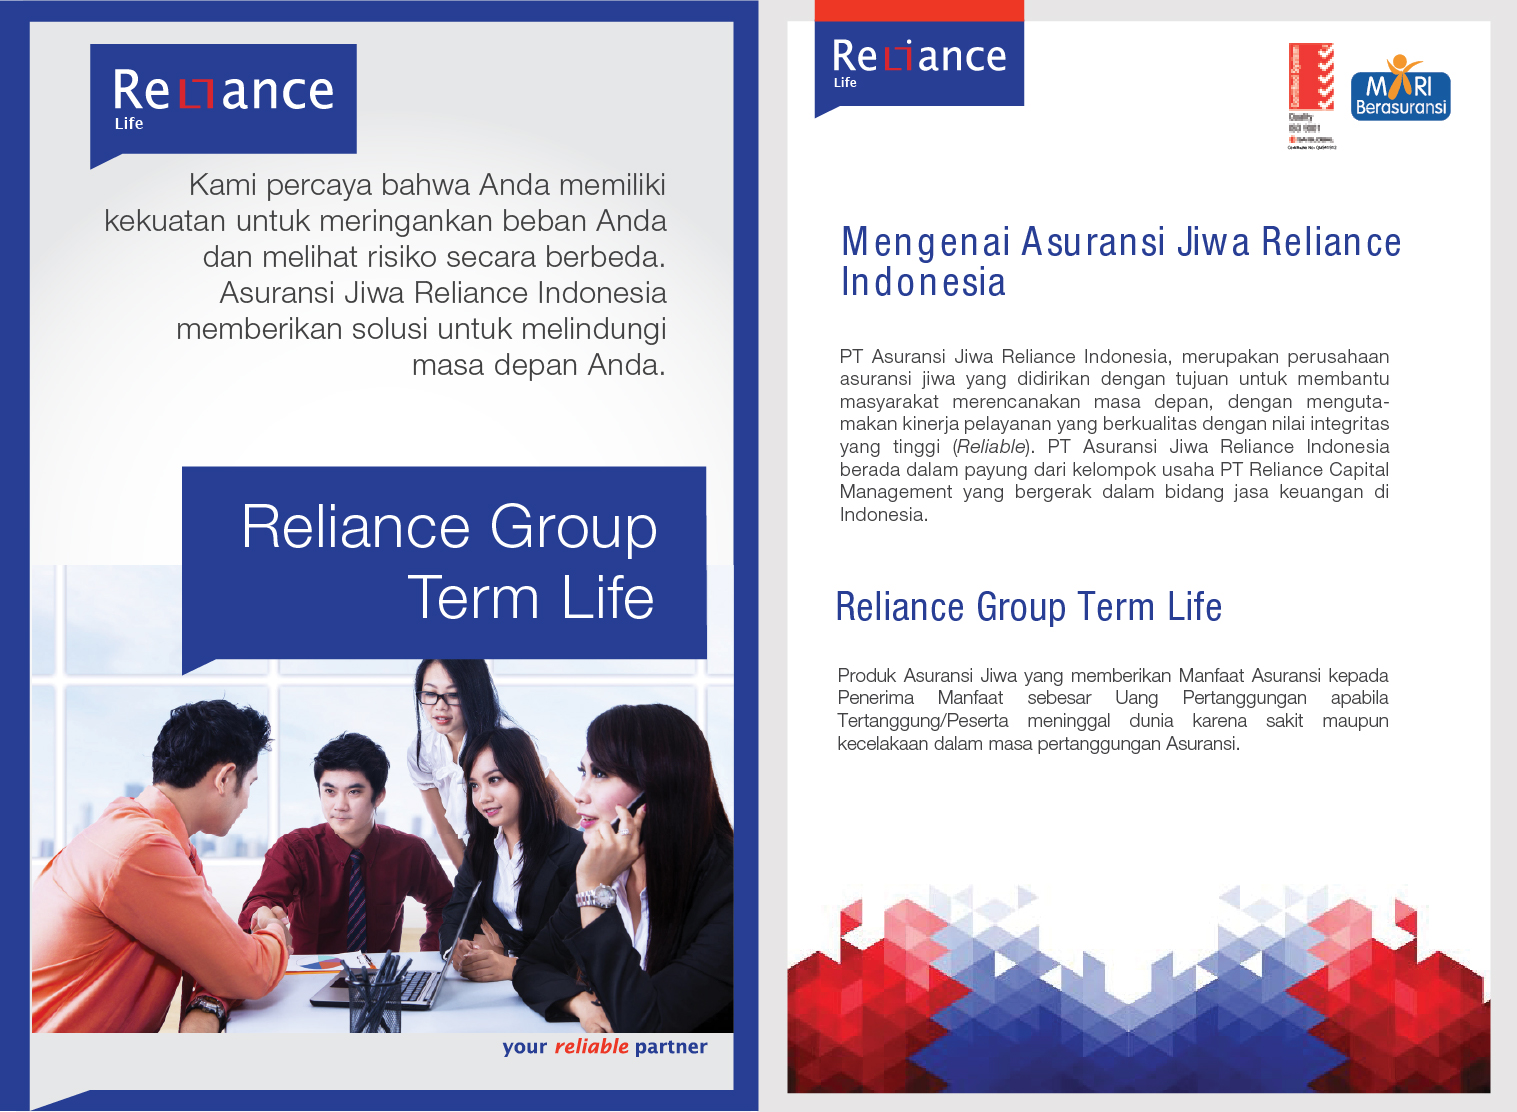 Reliance Group Term Life